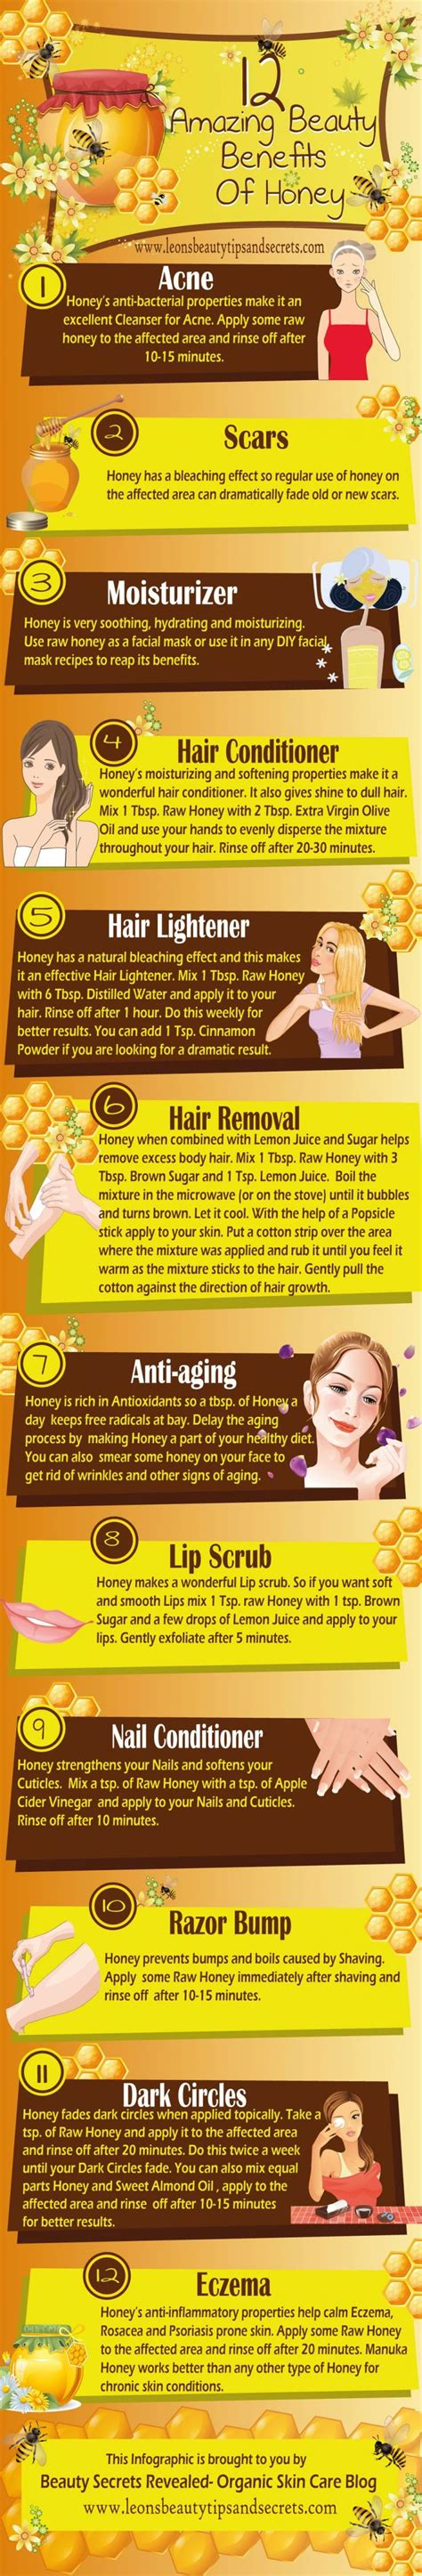 Benefits Of Honey 51 Amazing Health And Beauty Benefits